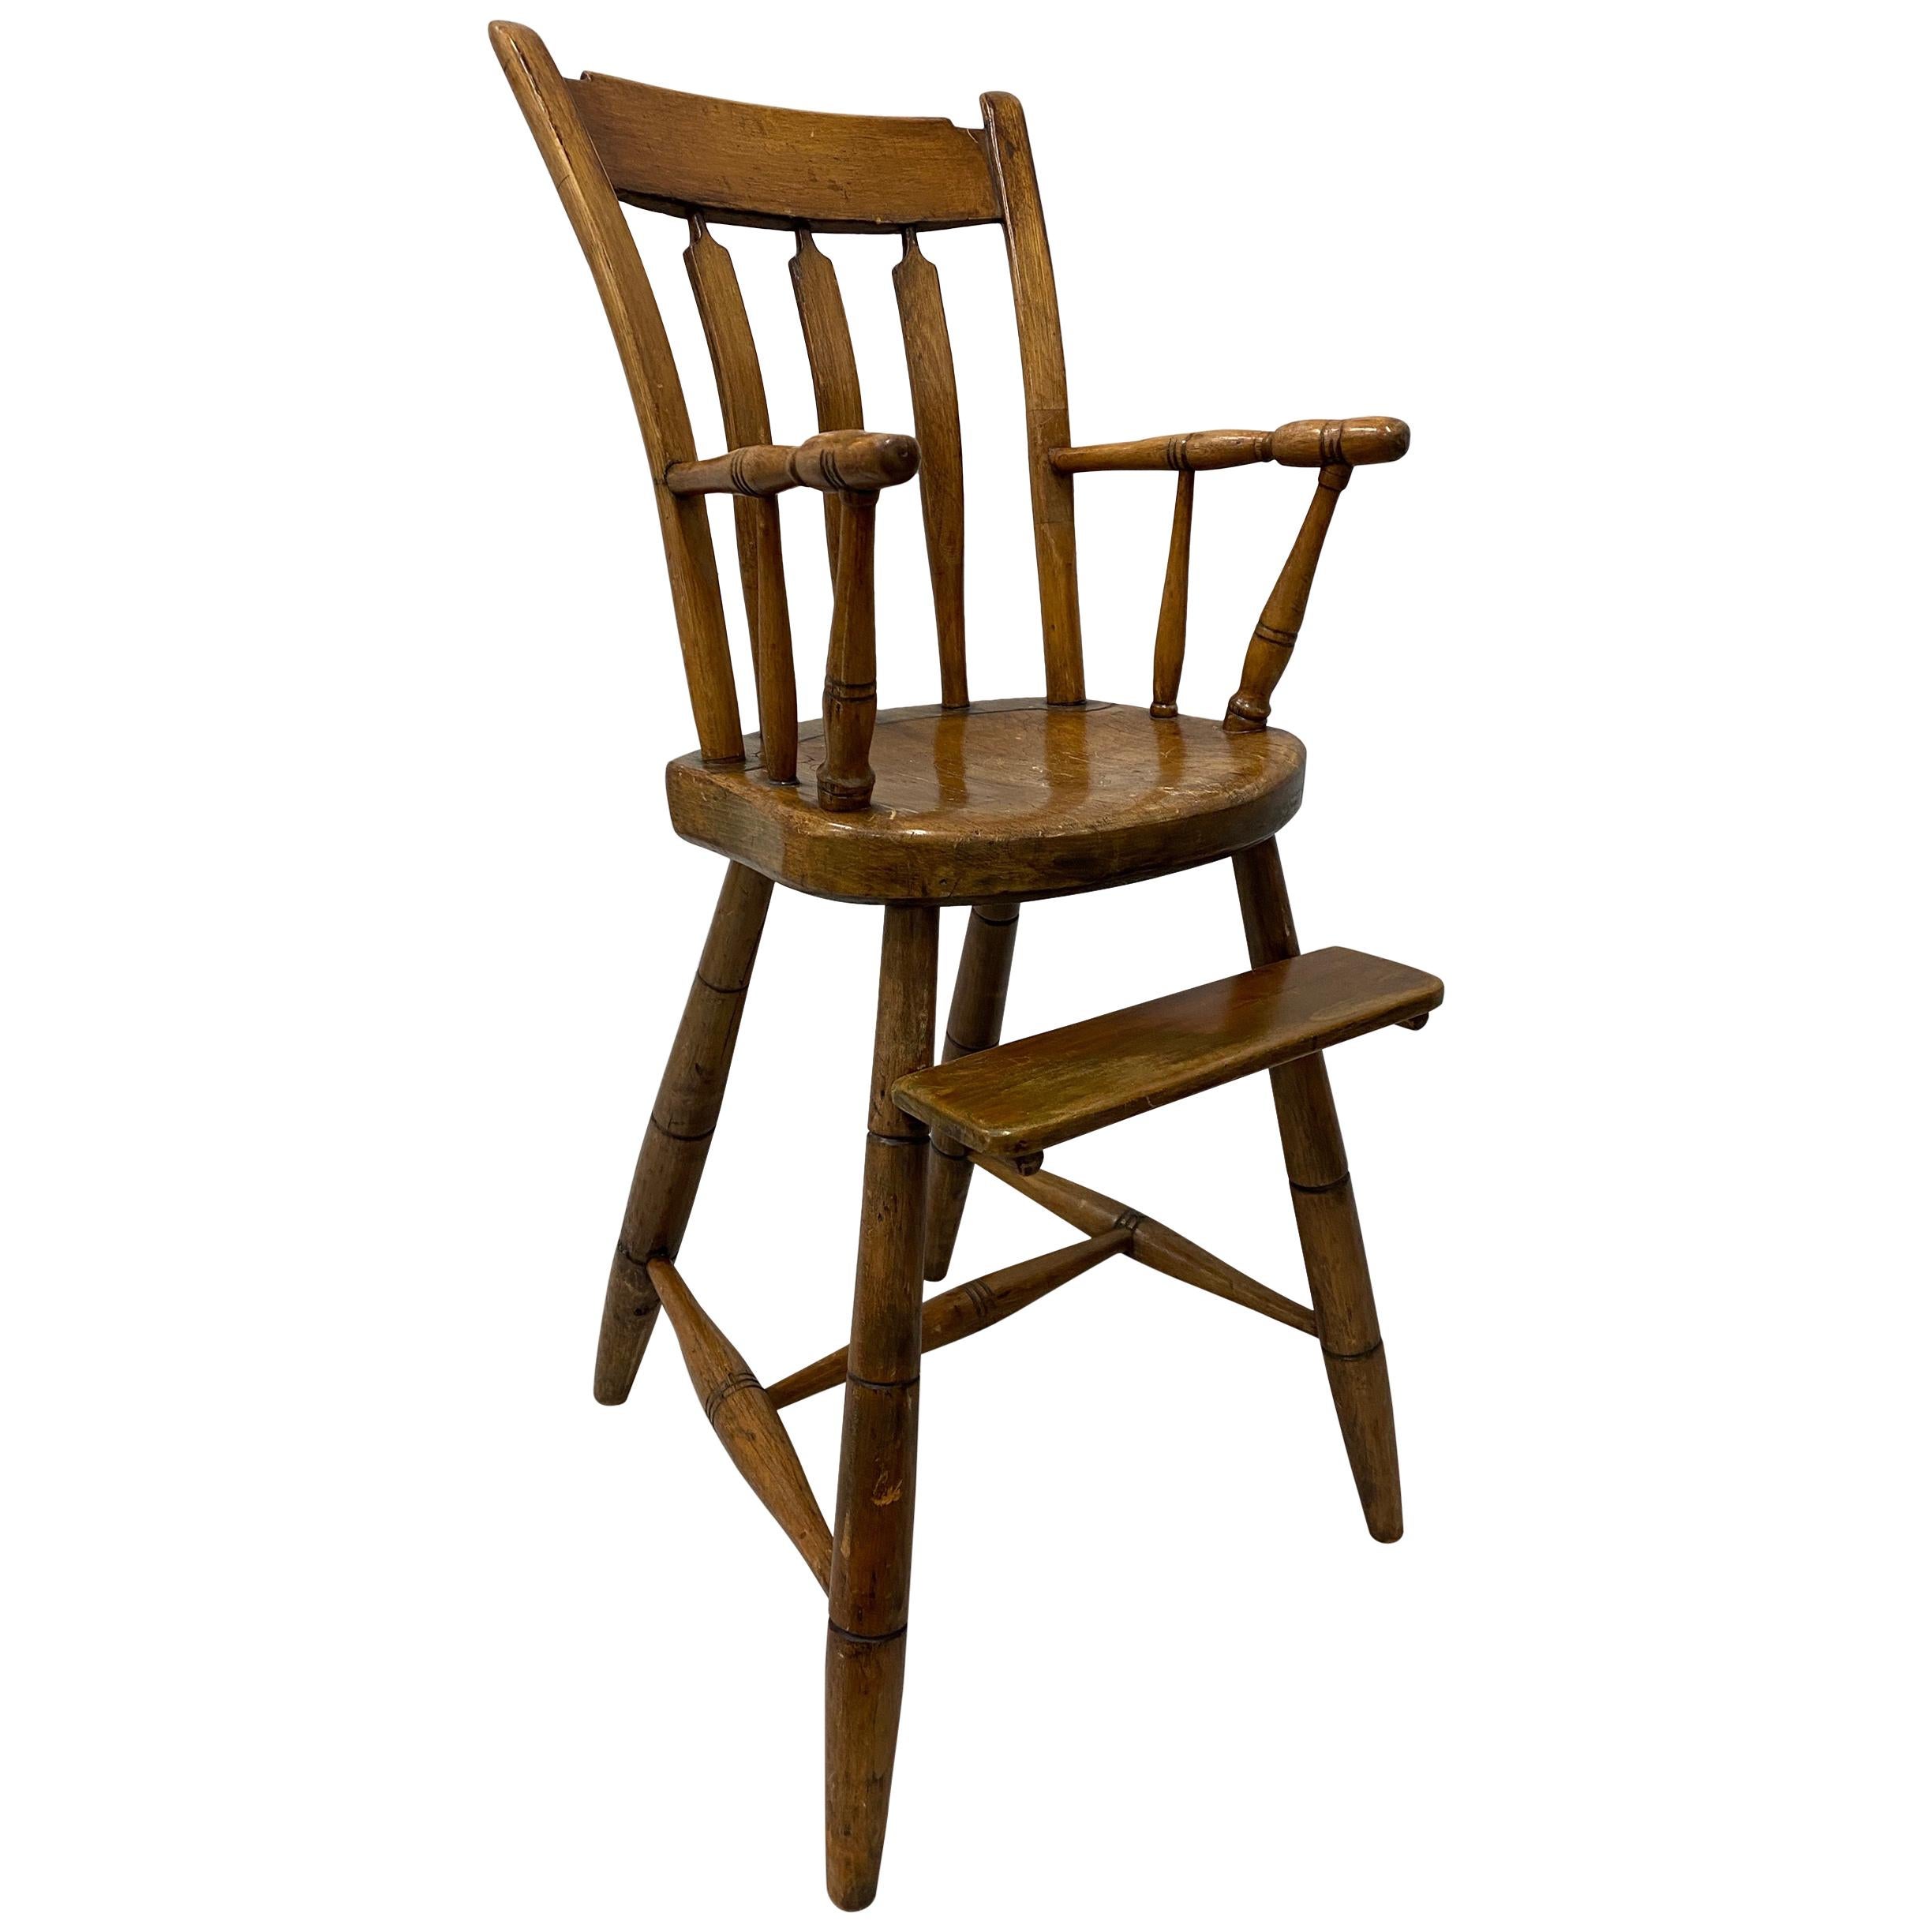 19th Century American Child's High Chair